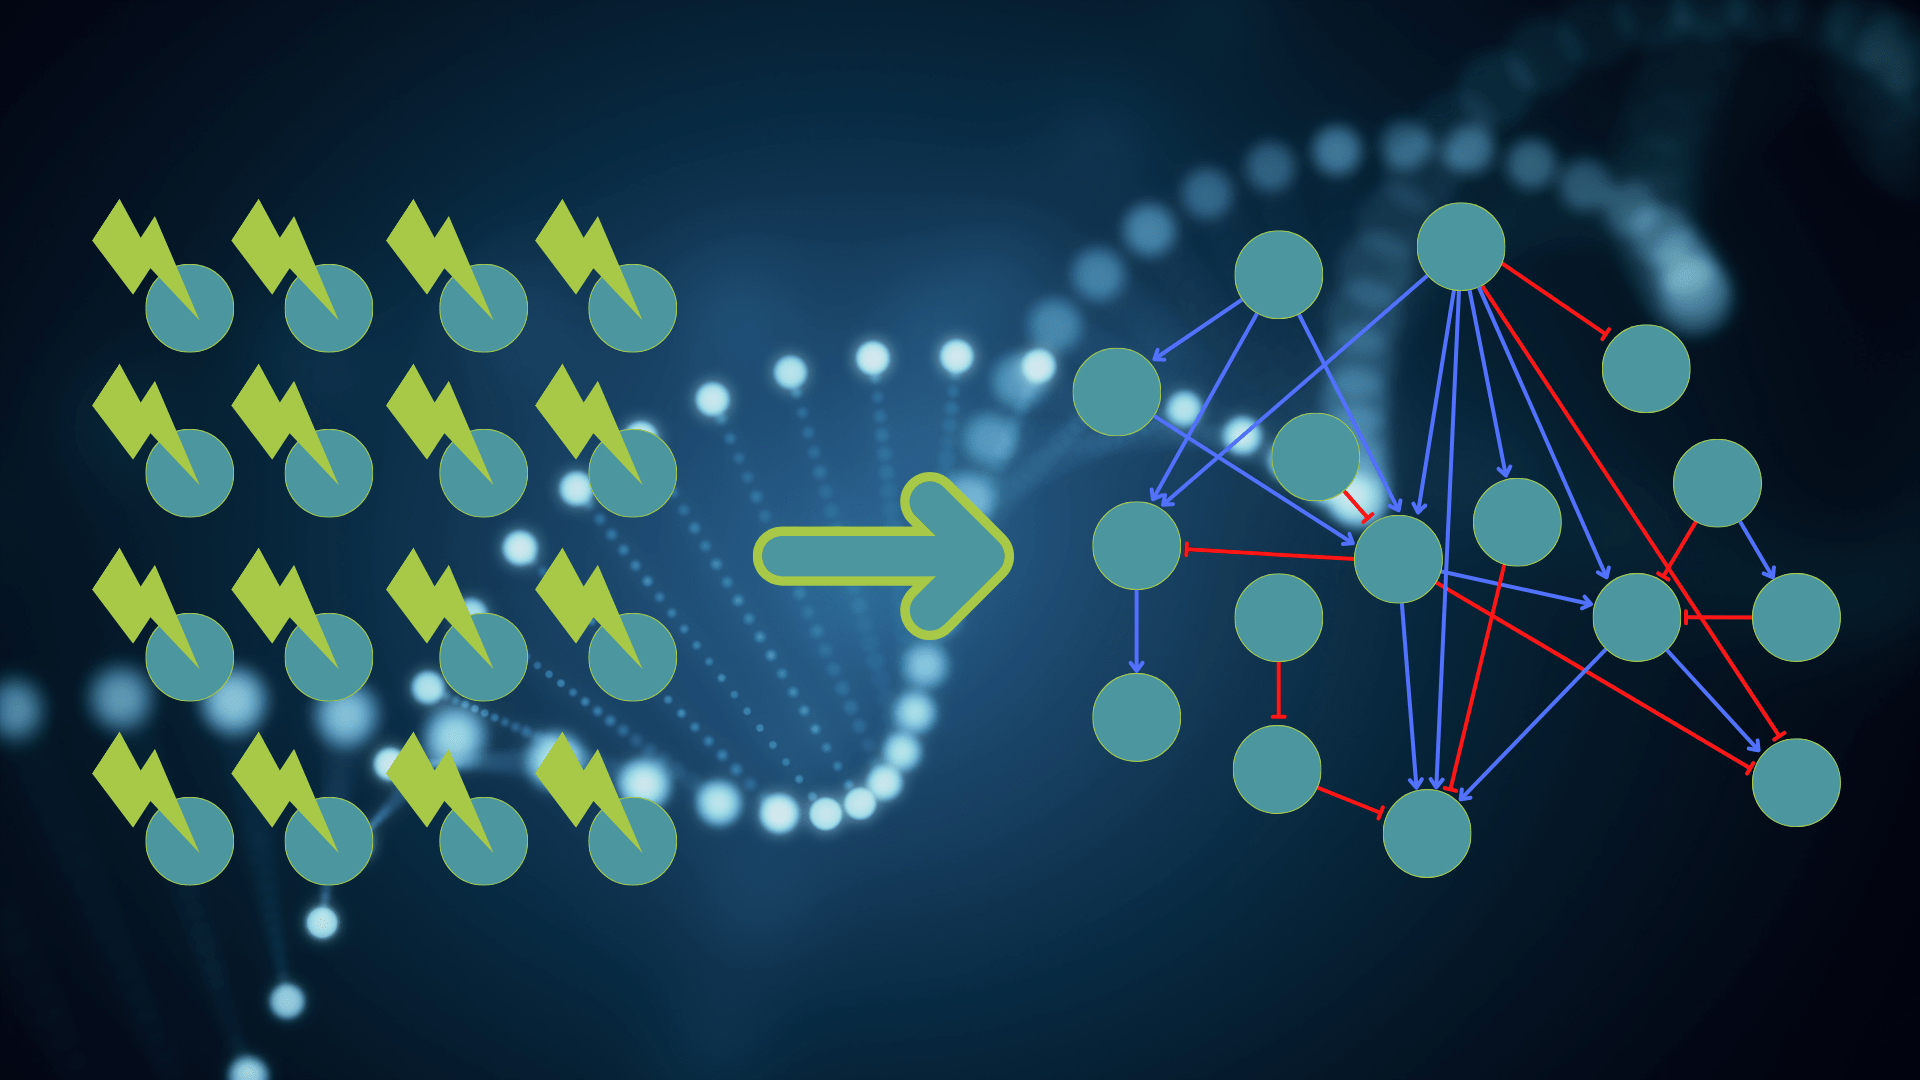 Perturbations revealed to be indispensable for Gene Regulatory Networks